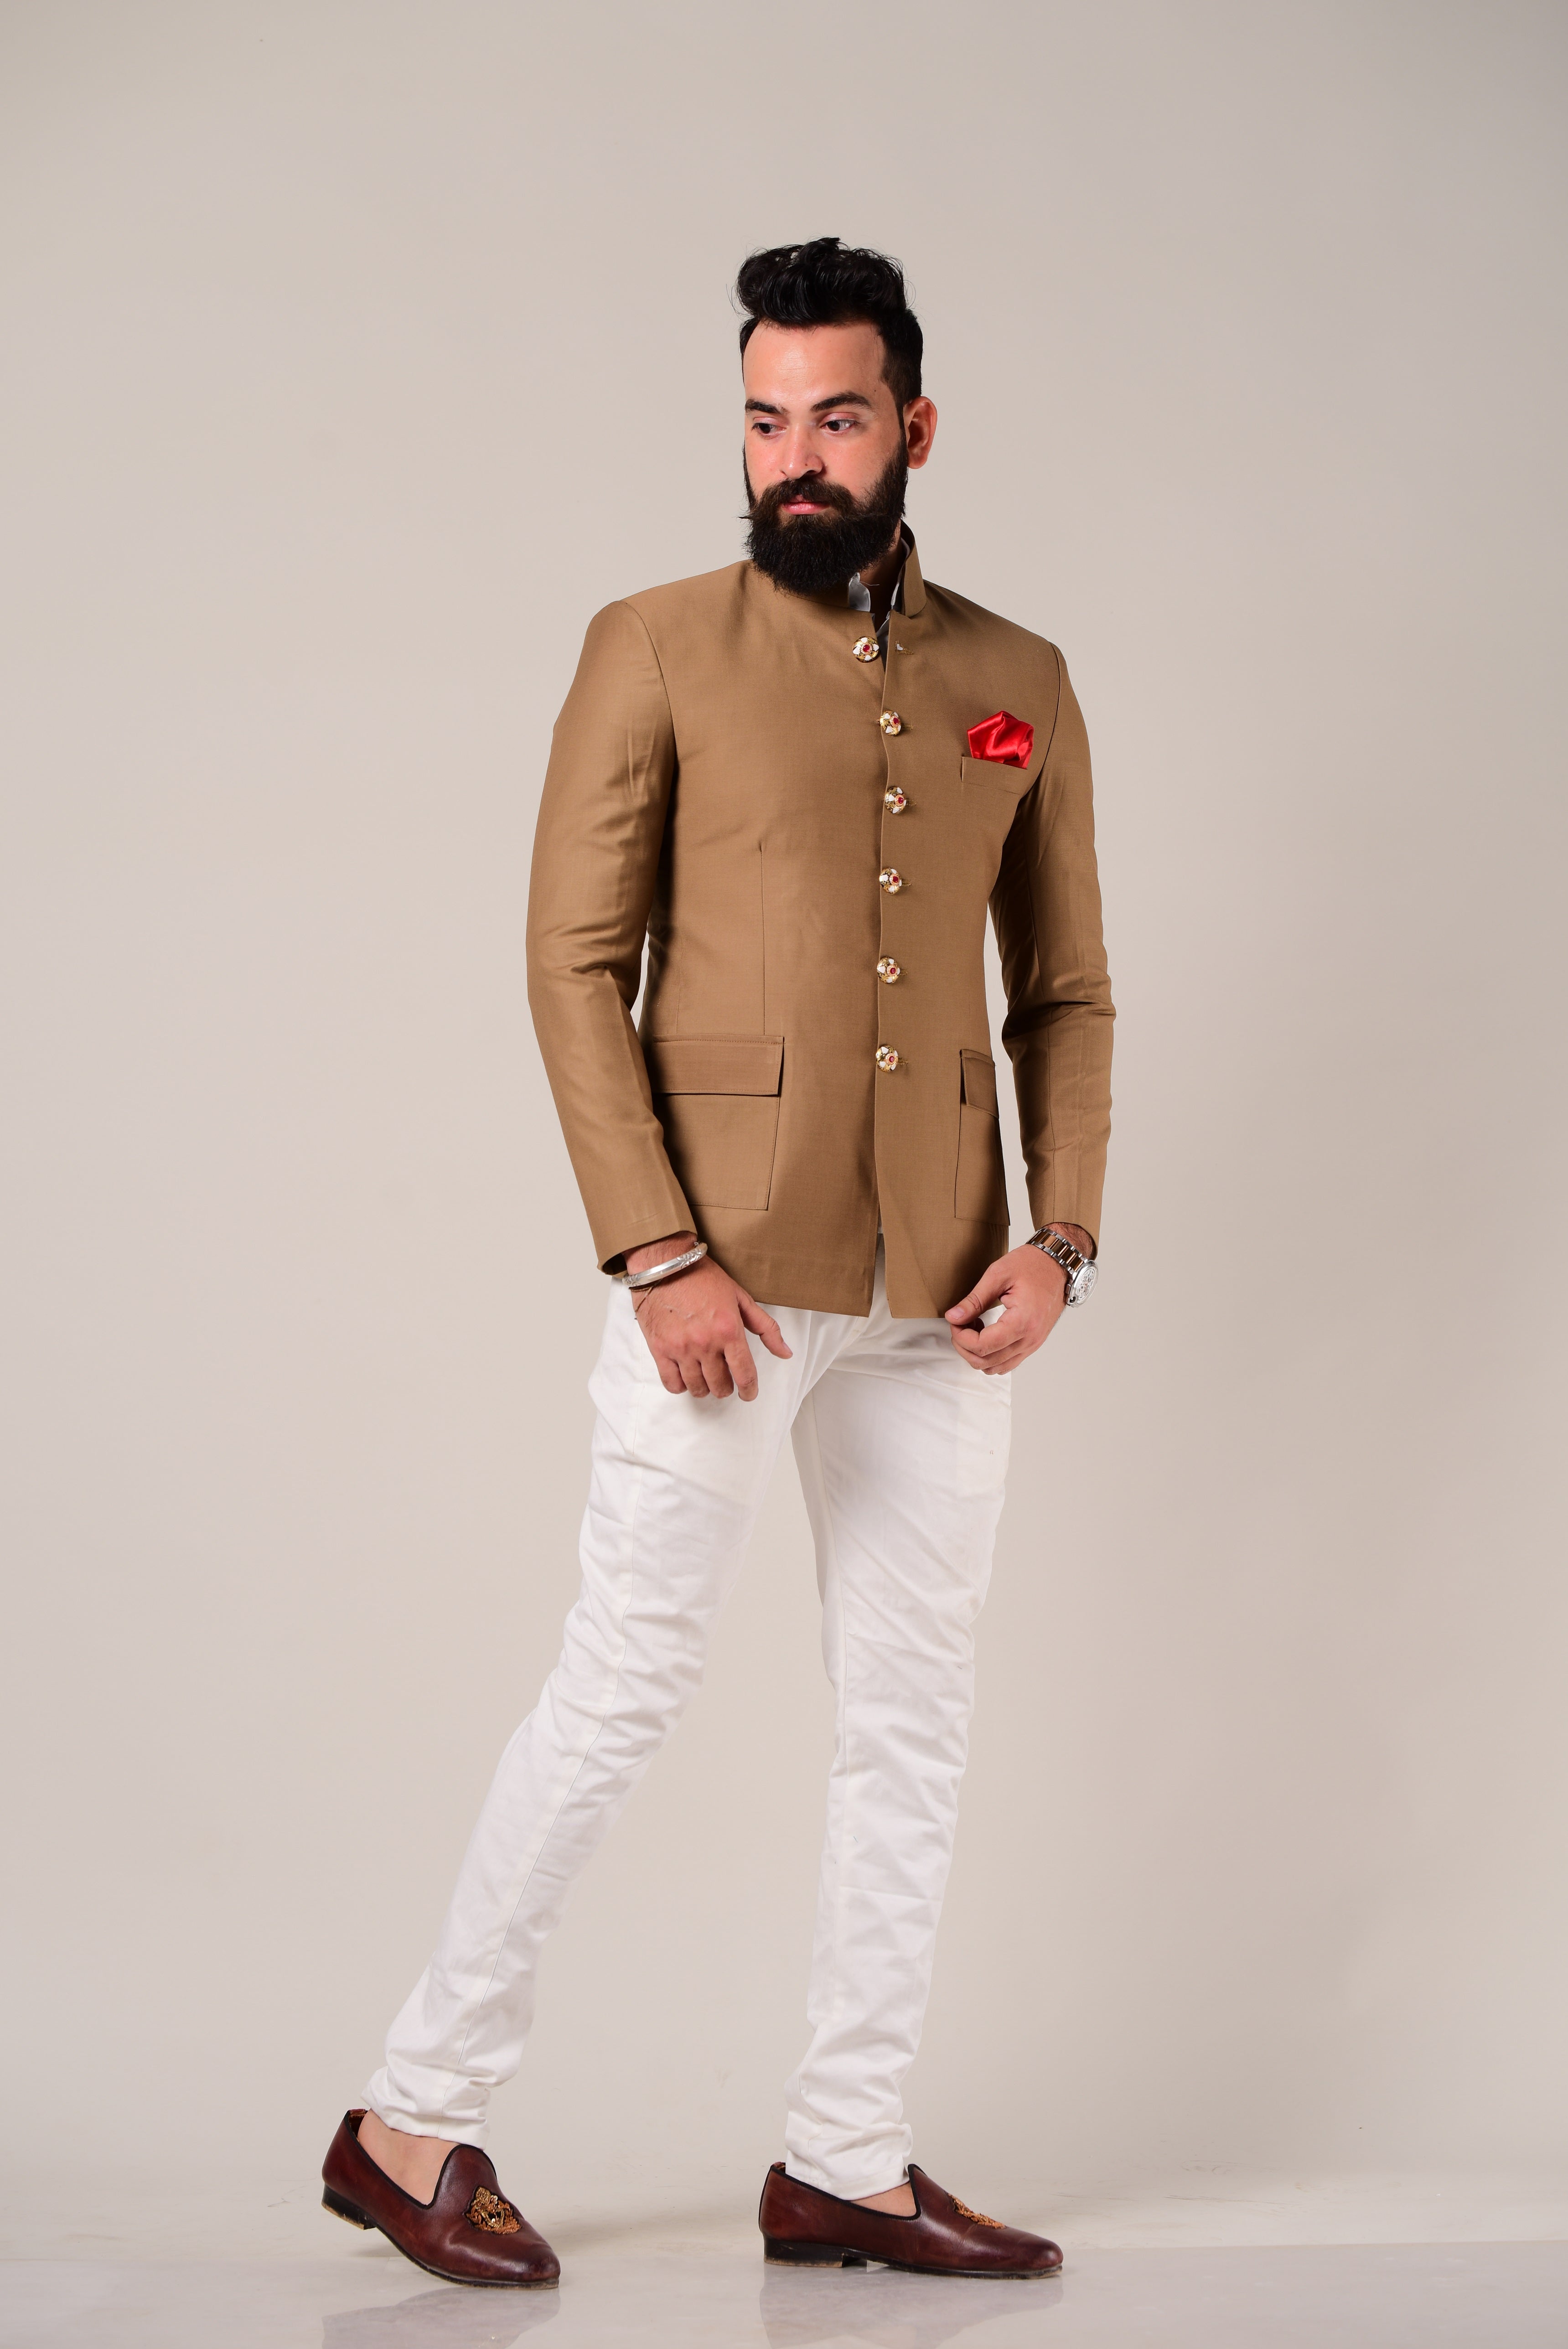 Buy Golden Jodhpuri Suit & Straight Cut Pant (Large) at Amazon.in